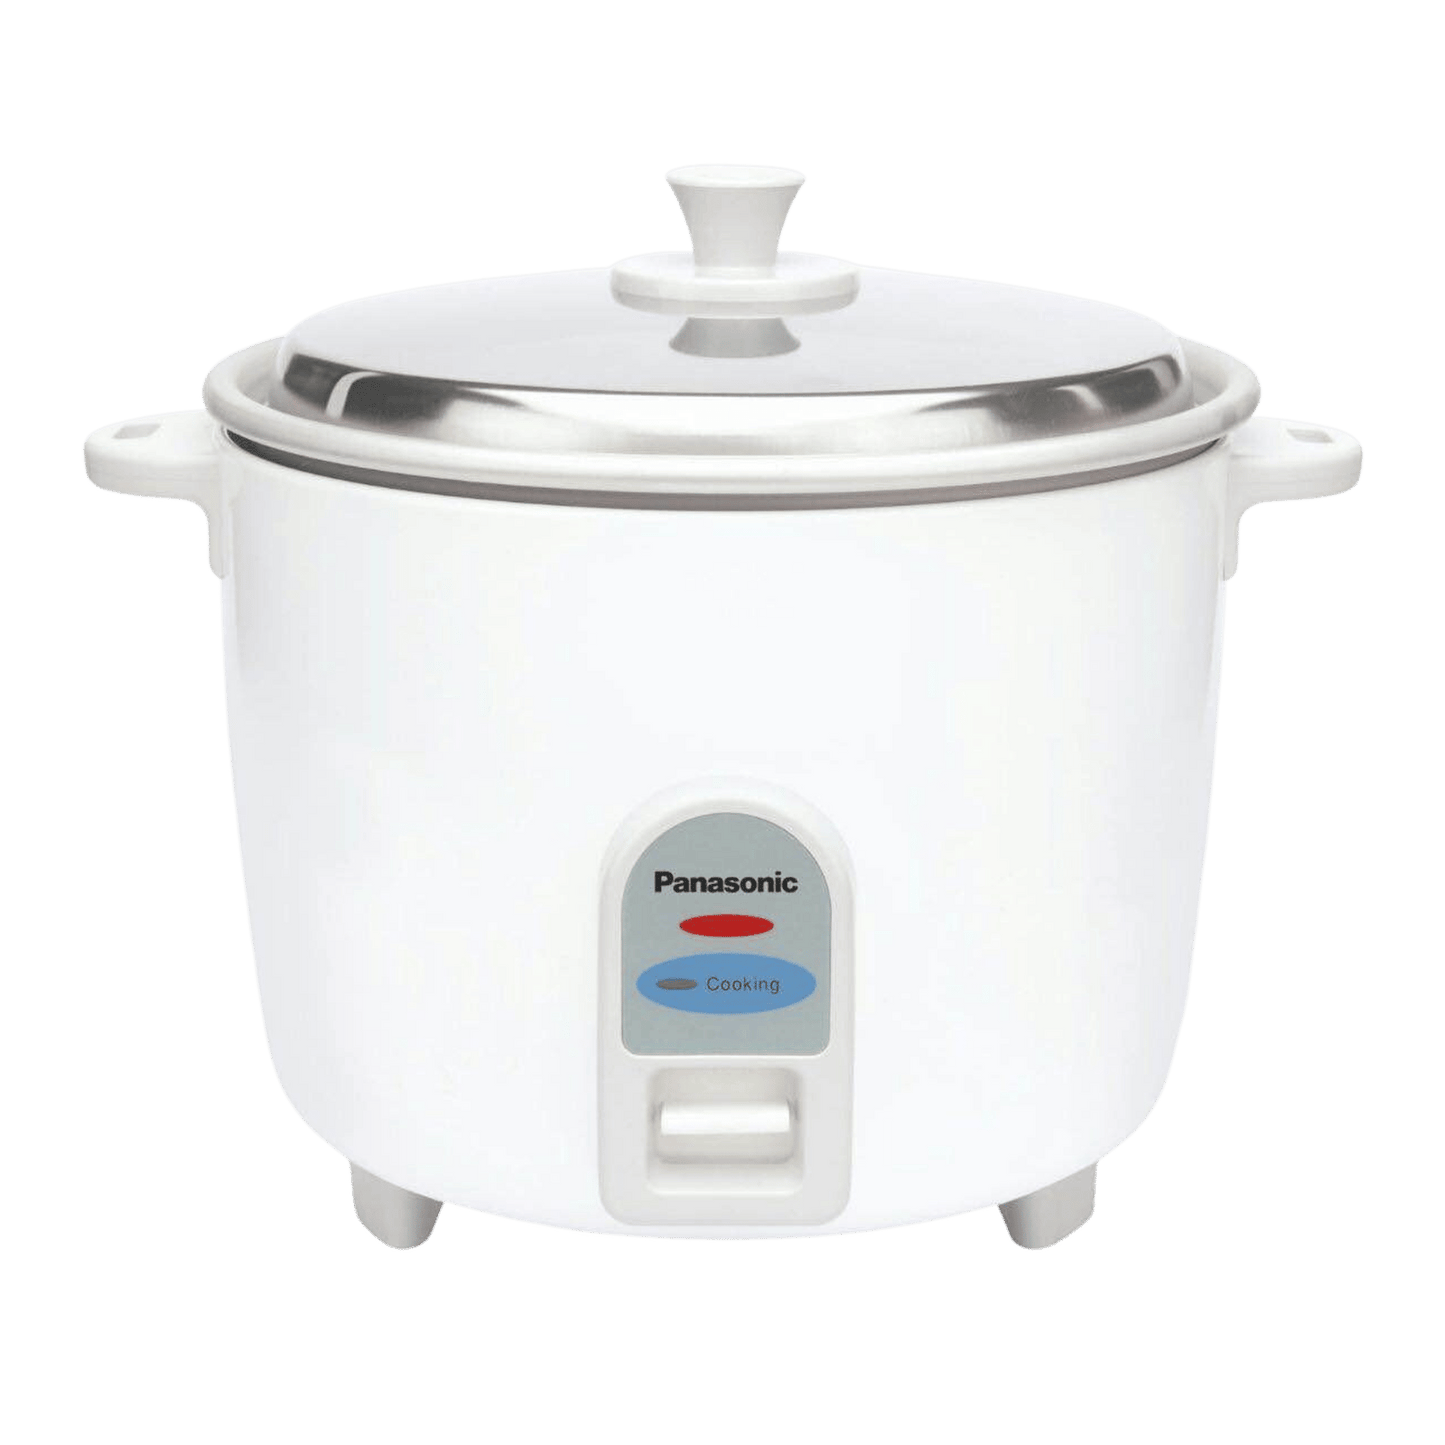 Panasonic SR WA 18 T J 1.8 Litre Electric Rice Cooker ( White)